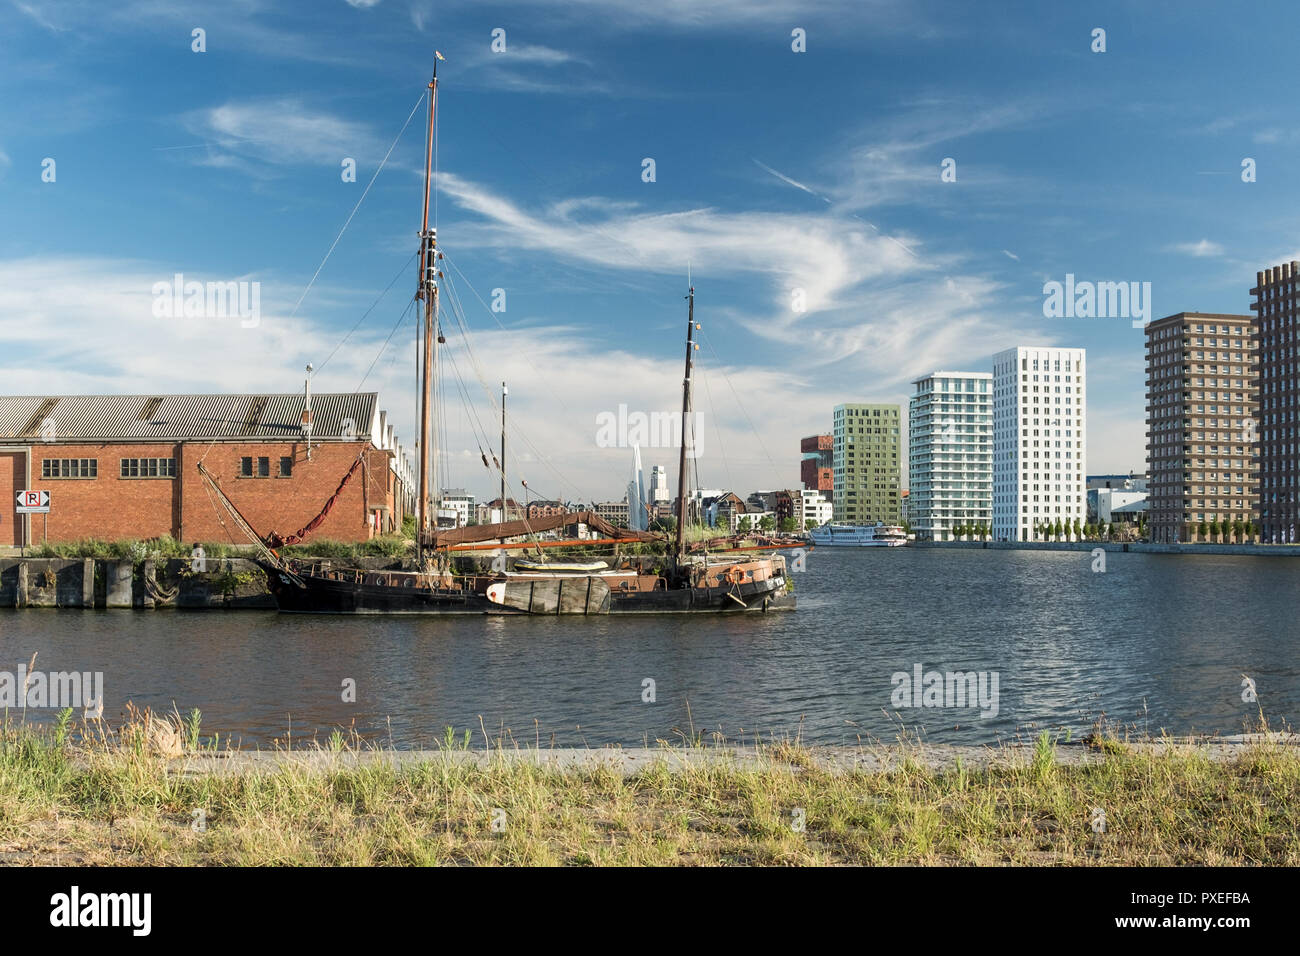 Old boat and buildings in Northern part of Antwerp, Monday 25 June 2017, Antwerp, Belgium. Stock Photo